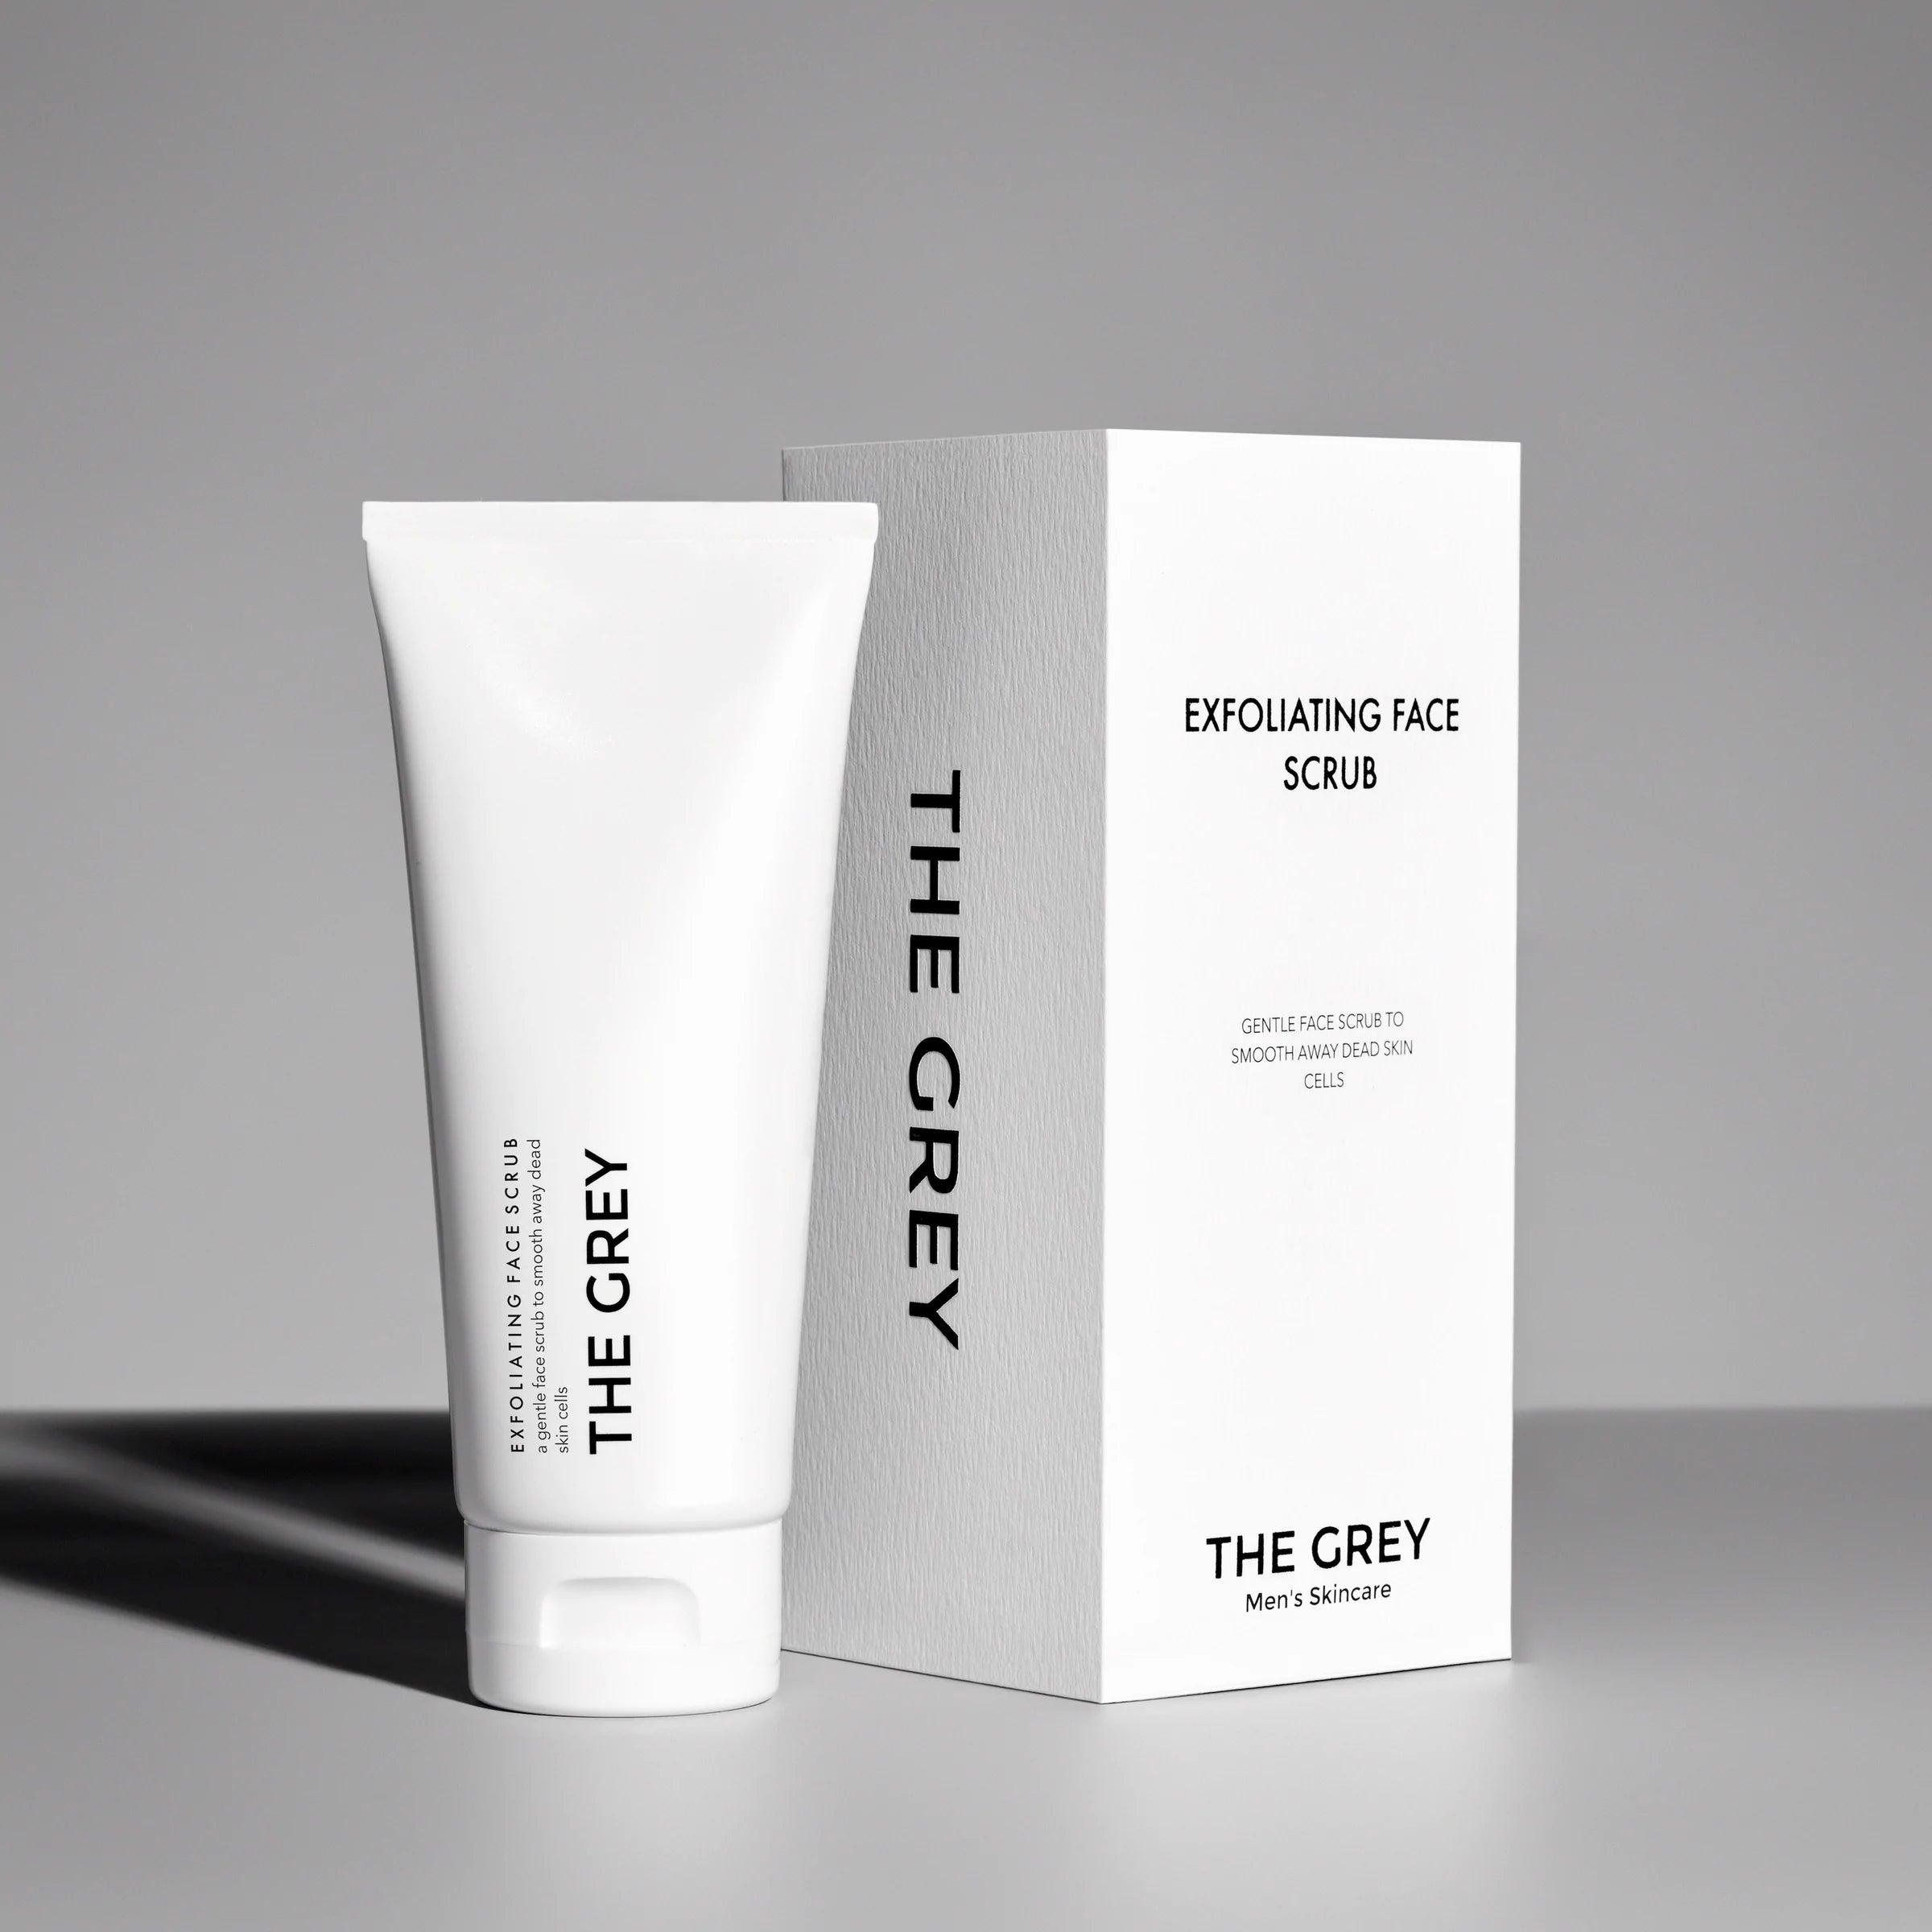 Exfoliating Face Scrub - The Grey Men's Skincare